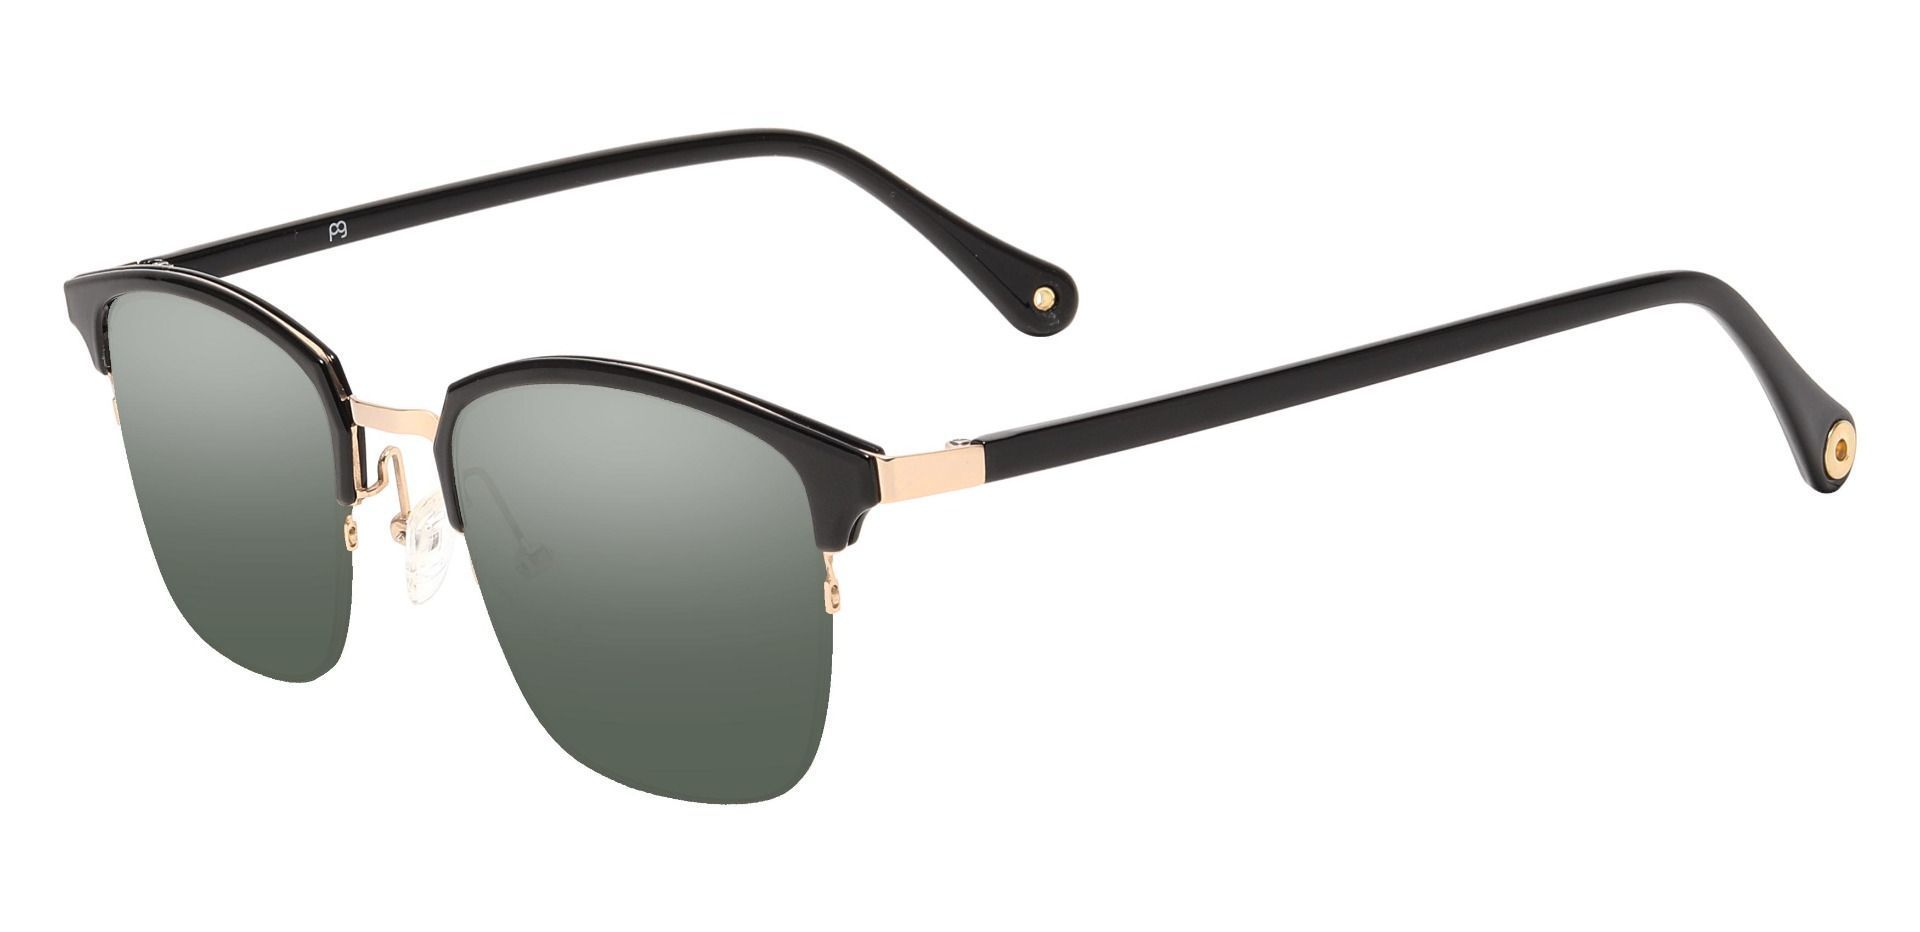 Atlantic Browline Non-Rx Sunglasses - Black Frame With Green Lenses